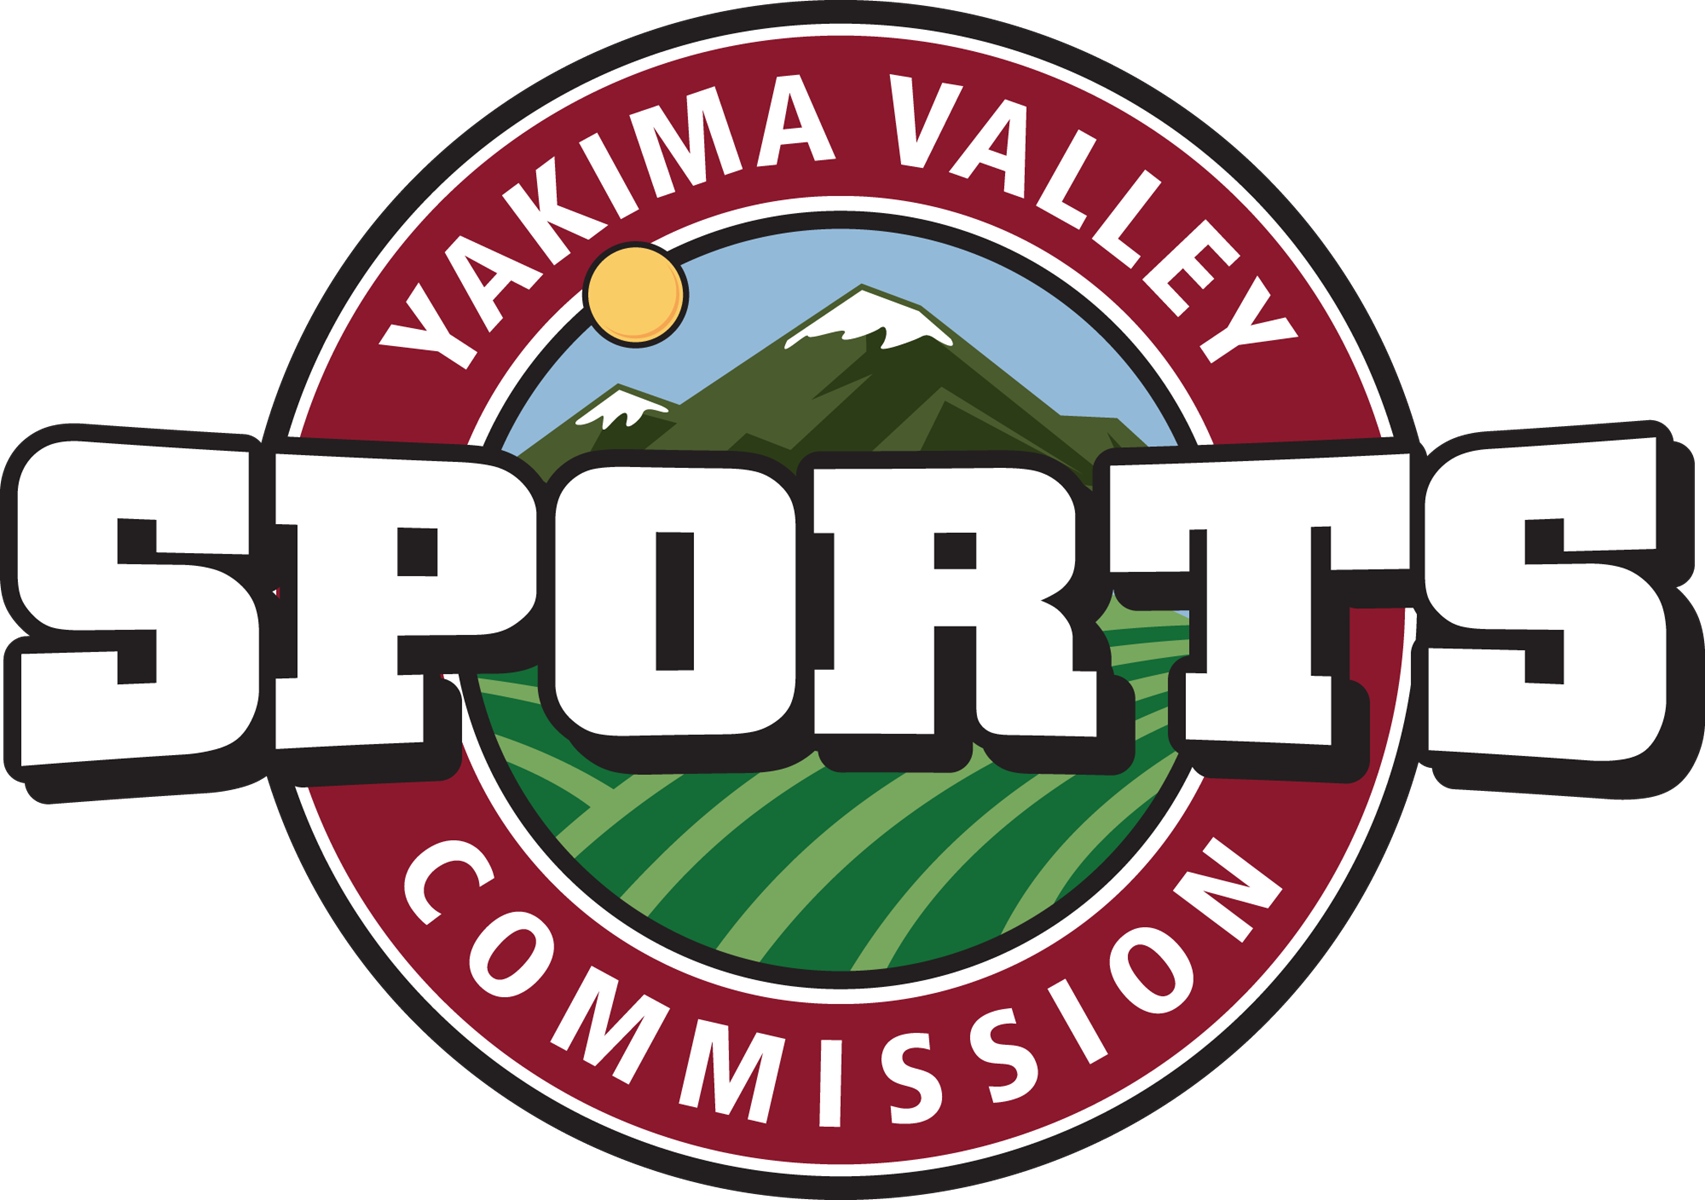 YakimaSports logo